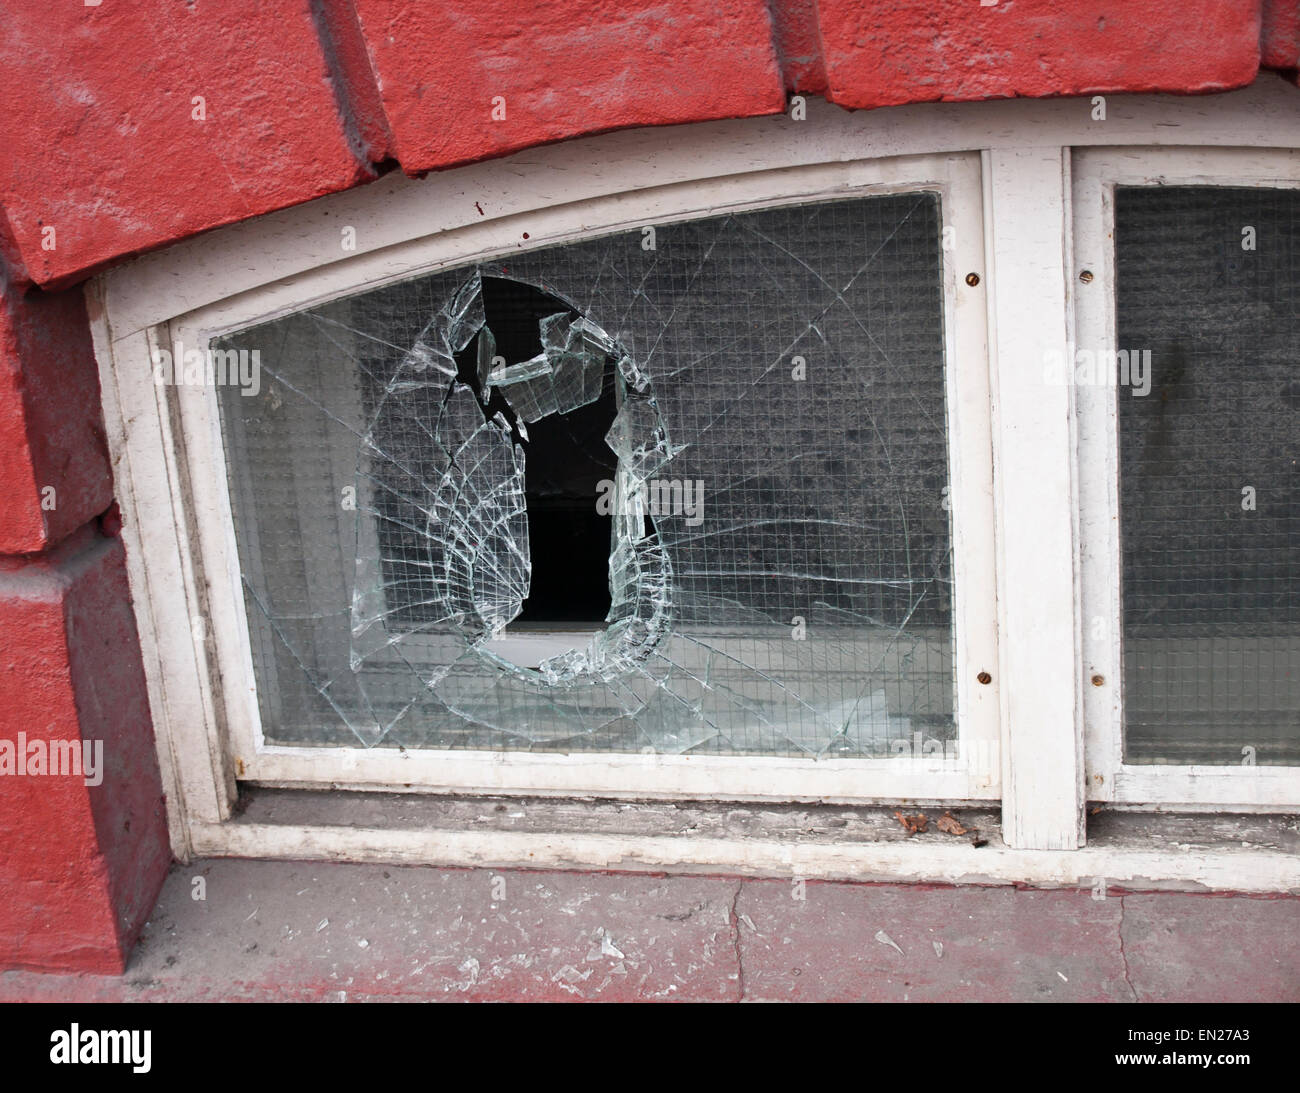 Broken Curved Basement Window With Safety Glass Burglary